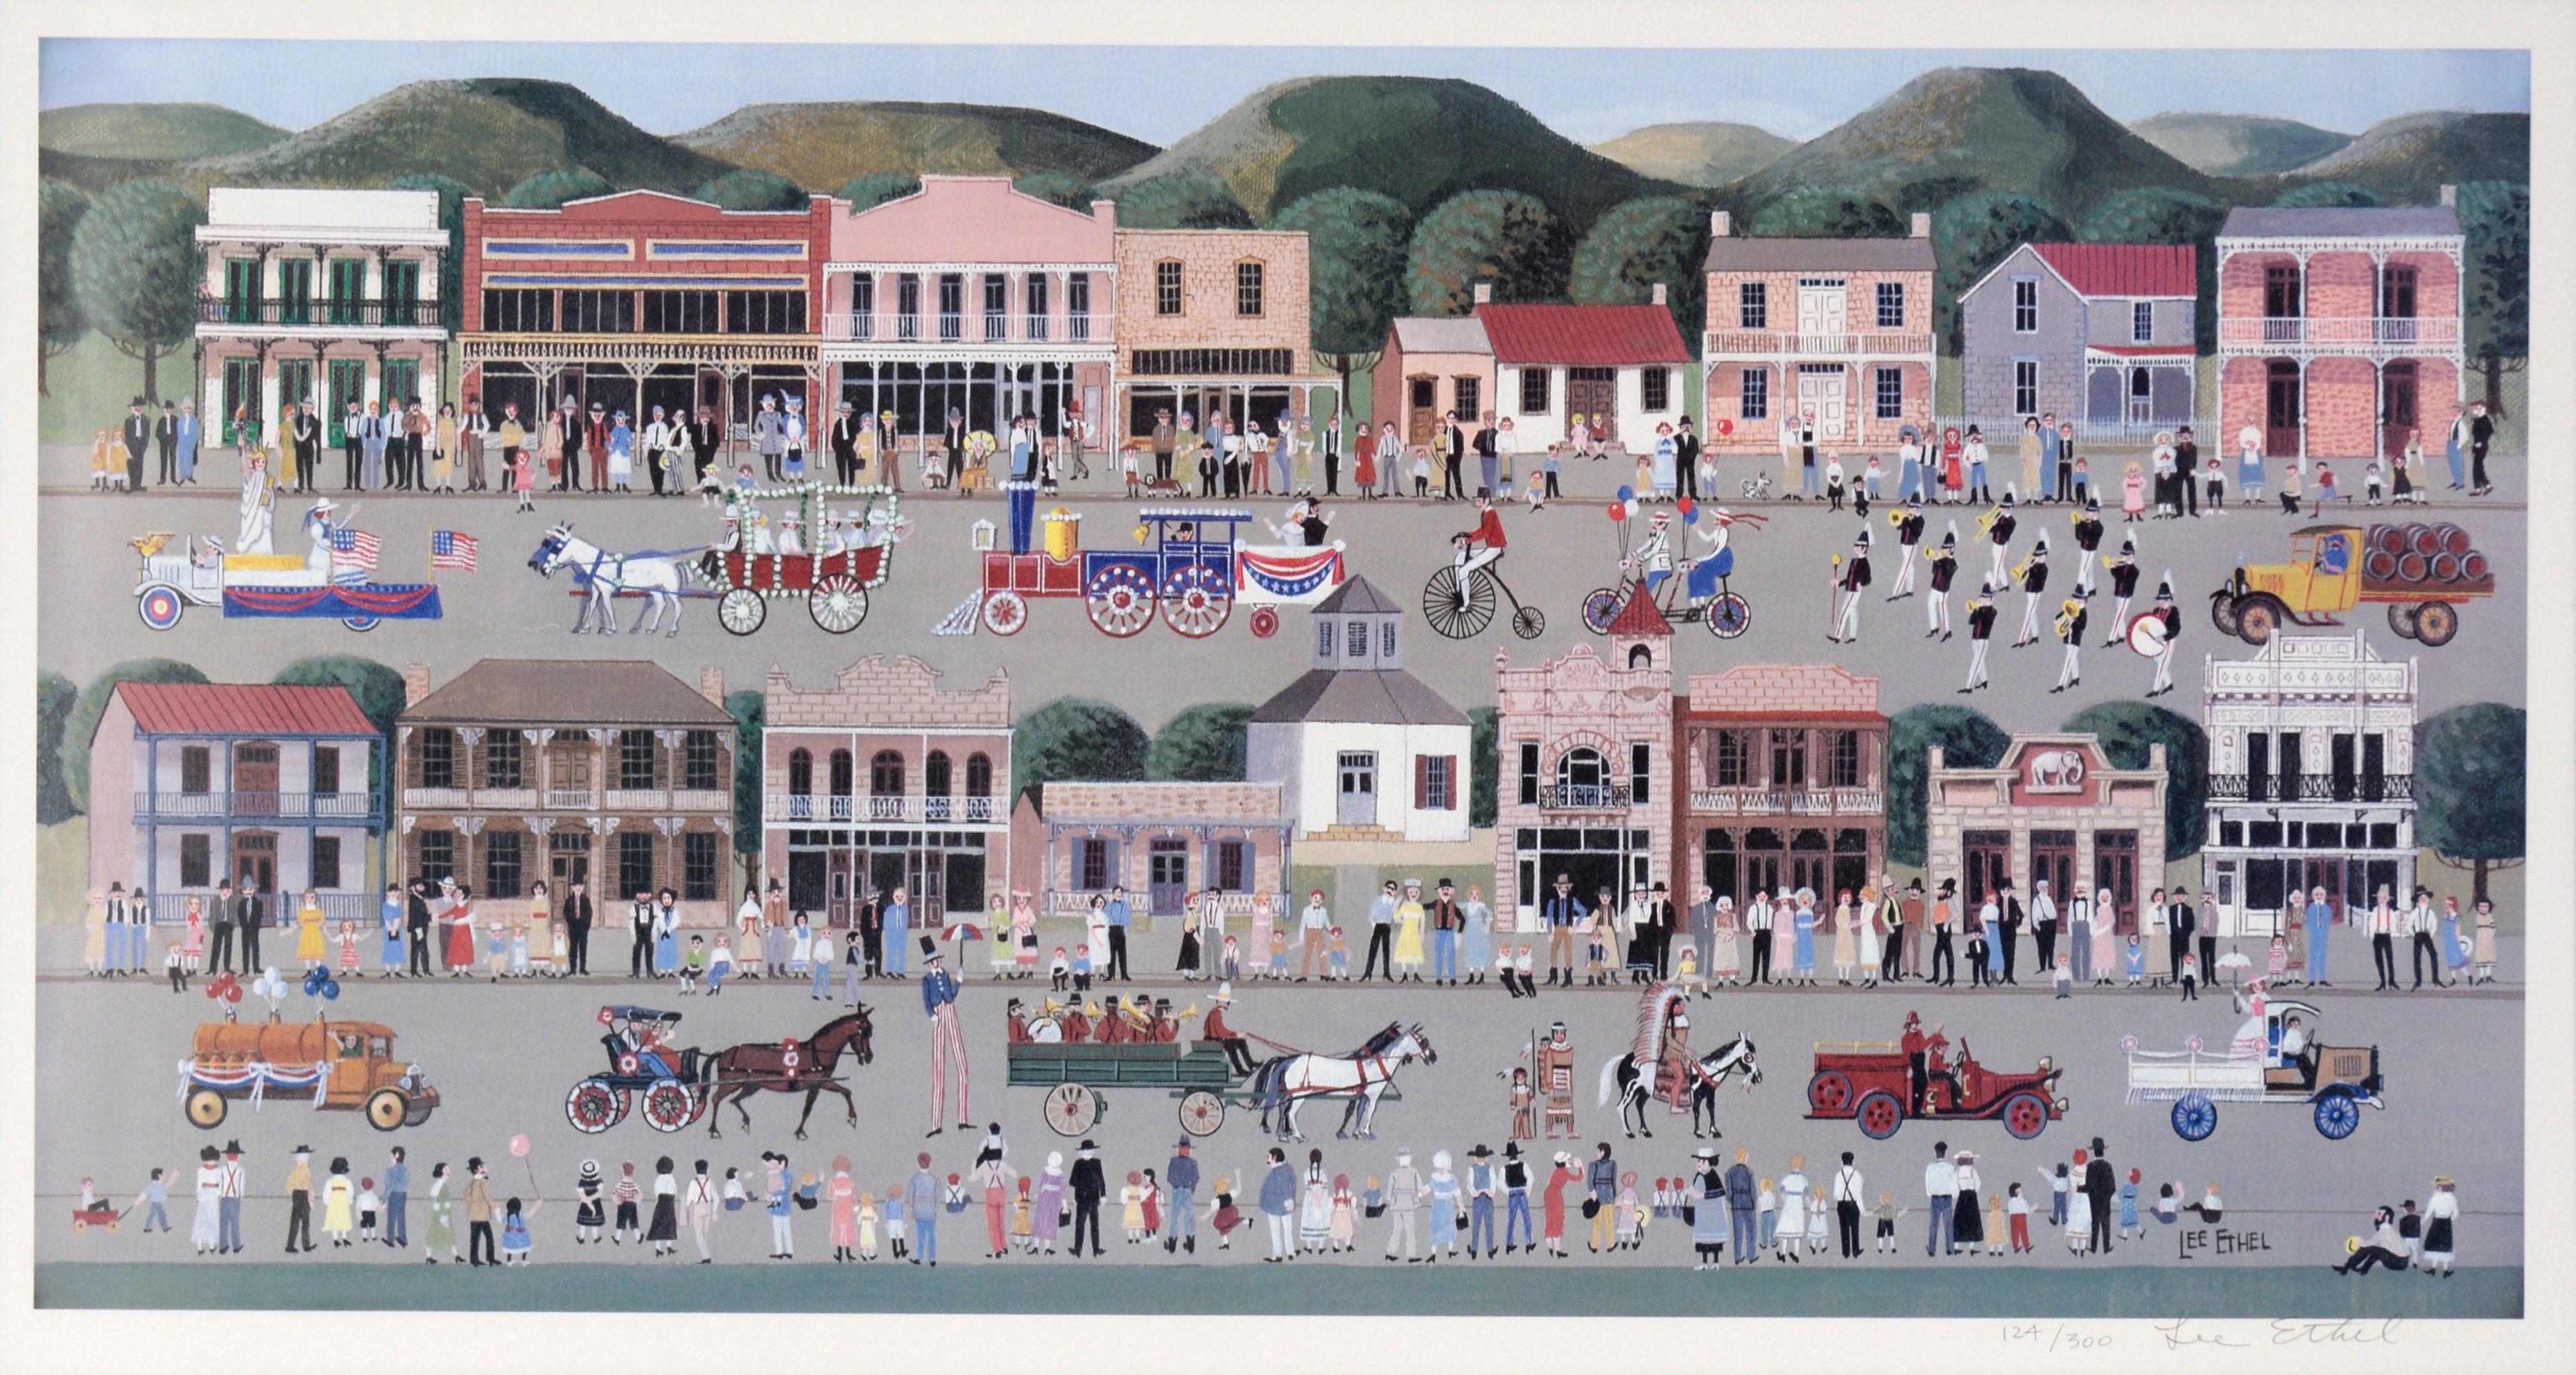 Town Parade - Folk Landscape #124/300 - Print by Lee Ethel